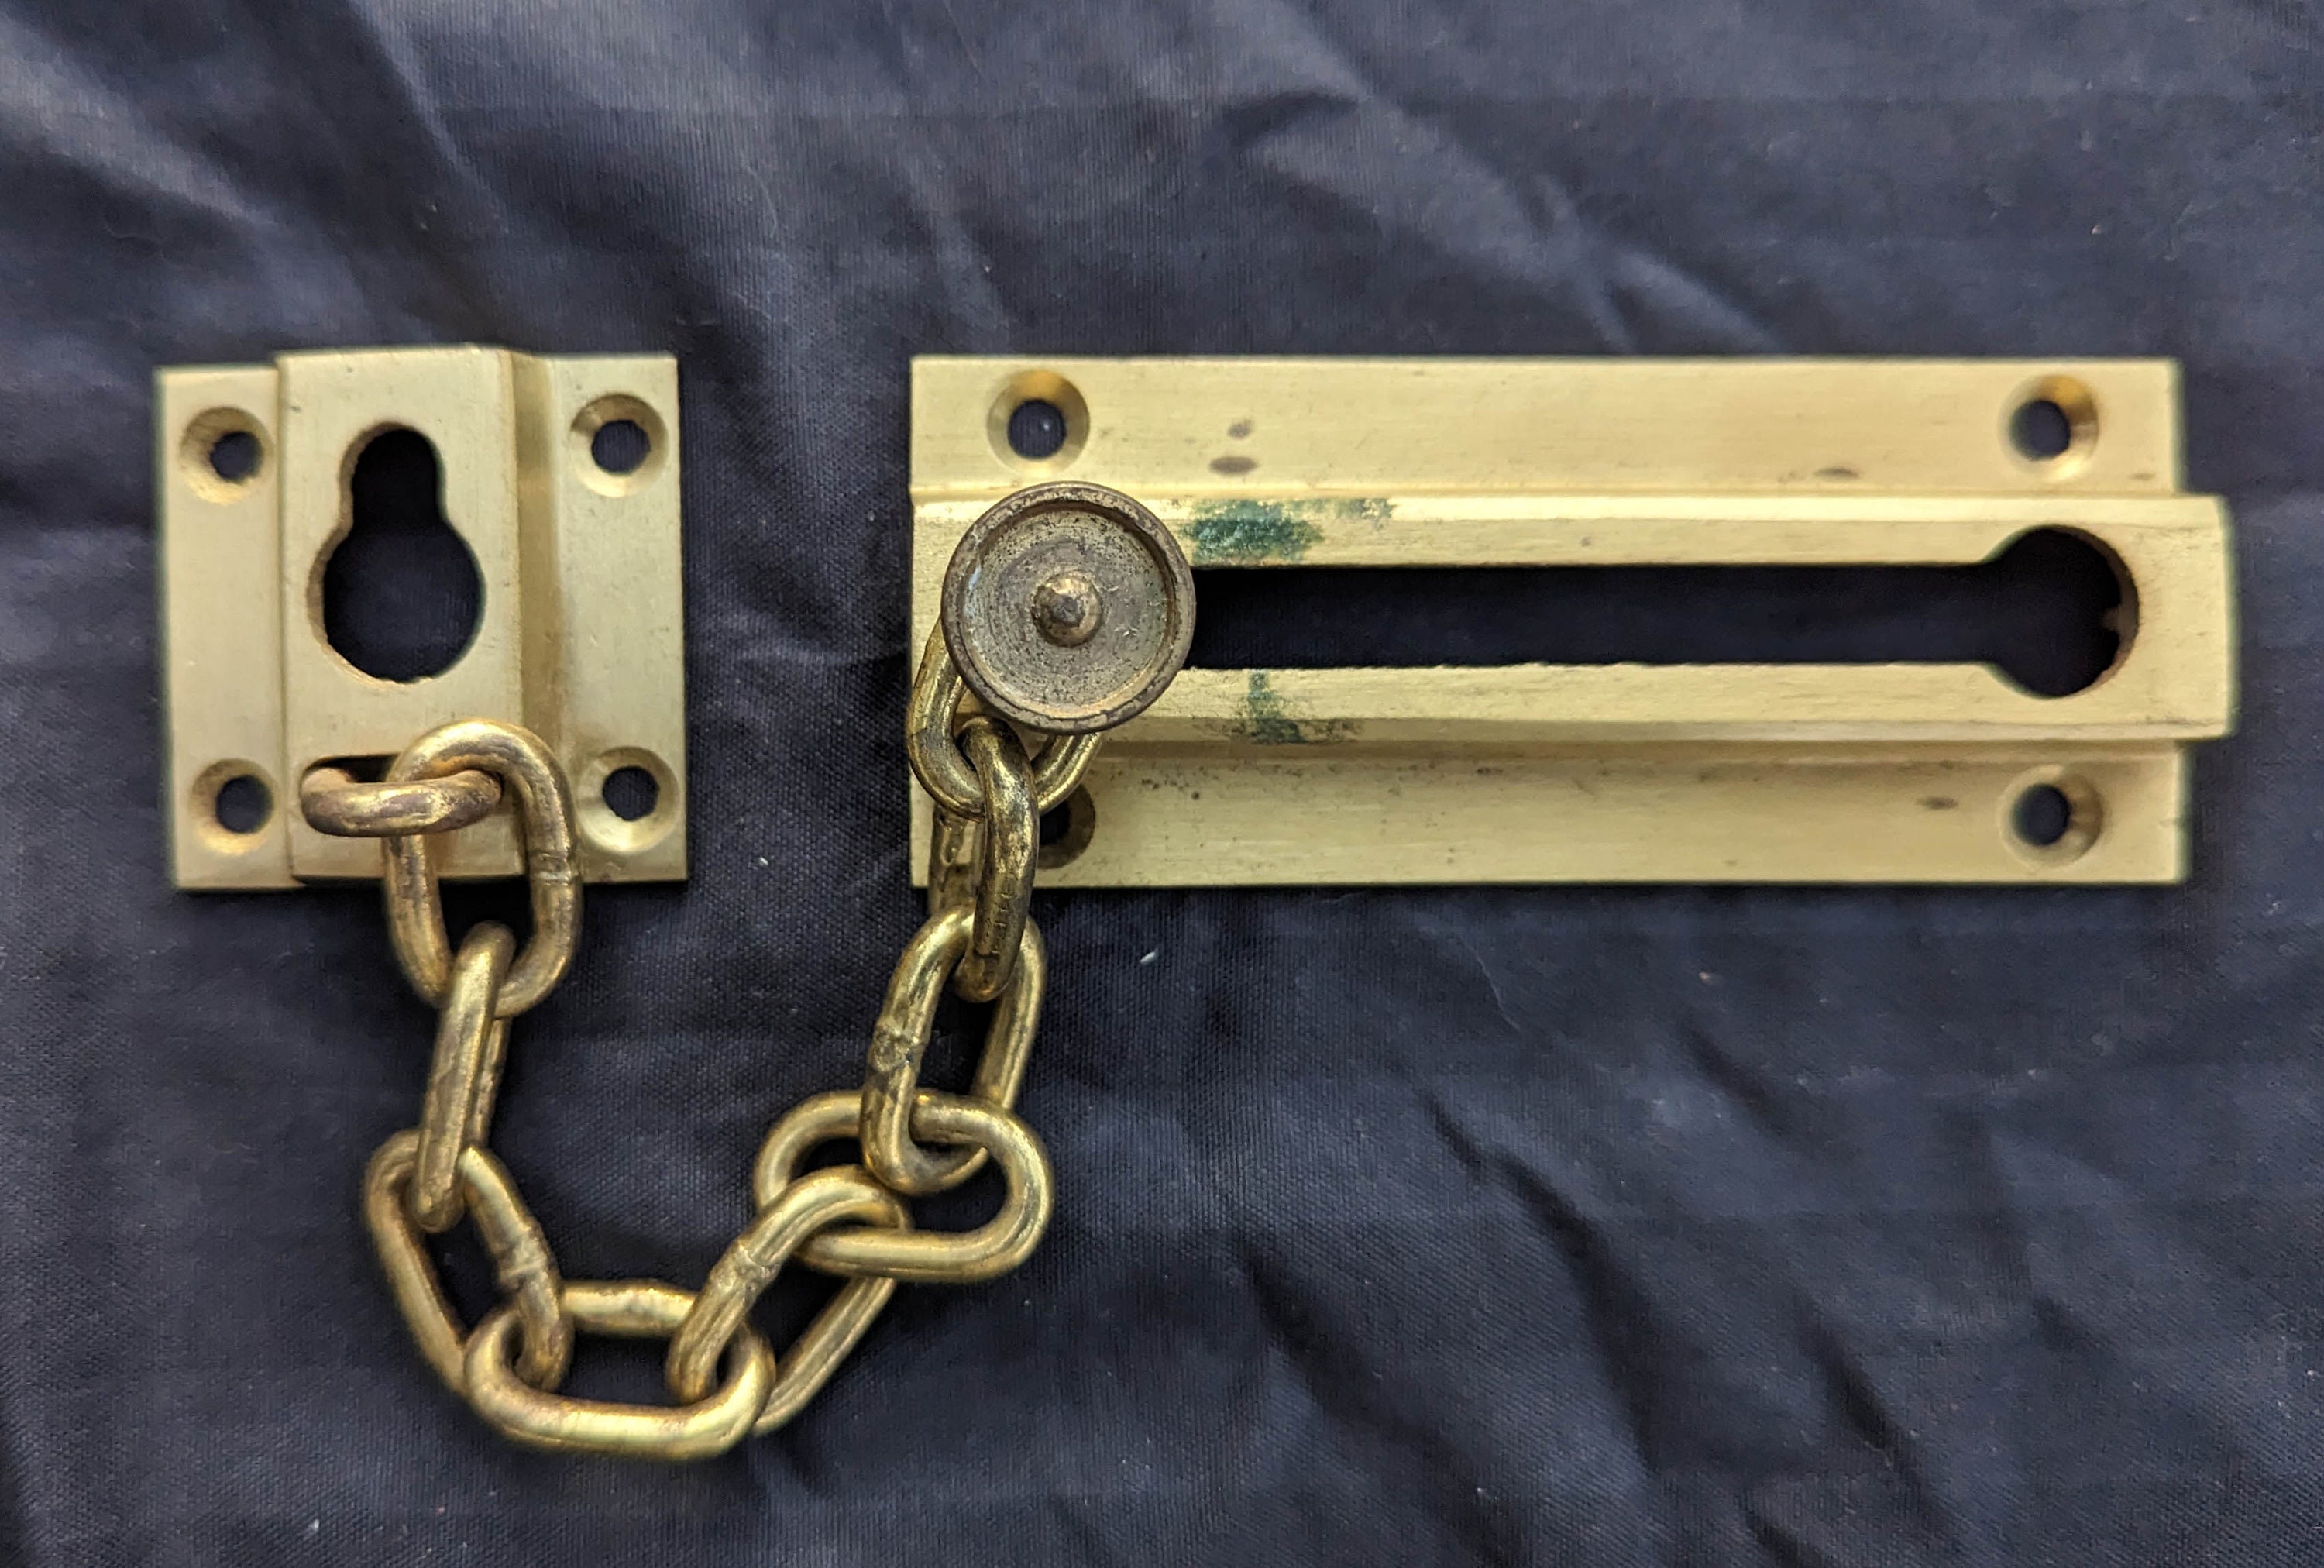 Extra Security LOCKING DOOR CHAIN & Keys Heavy Duty Safety Door